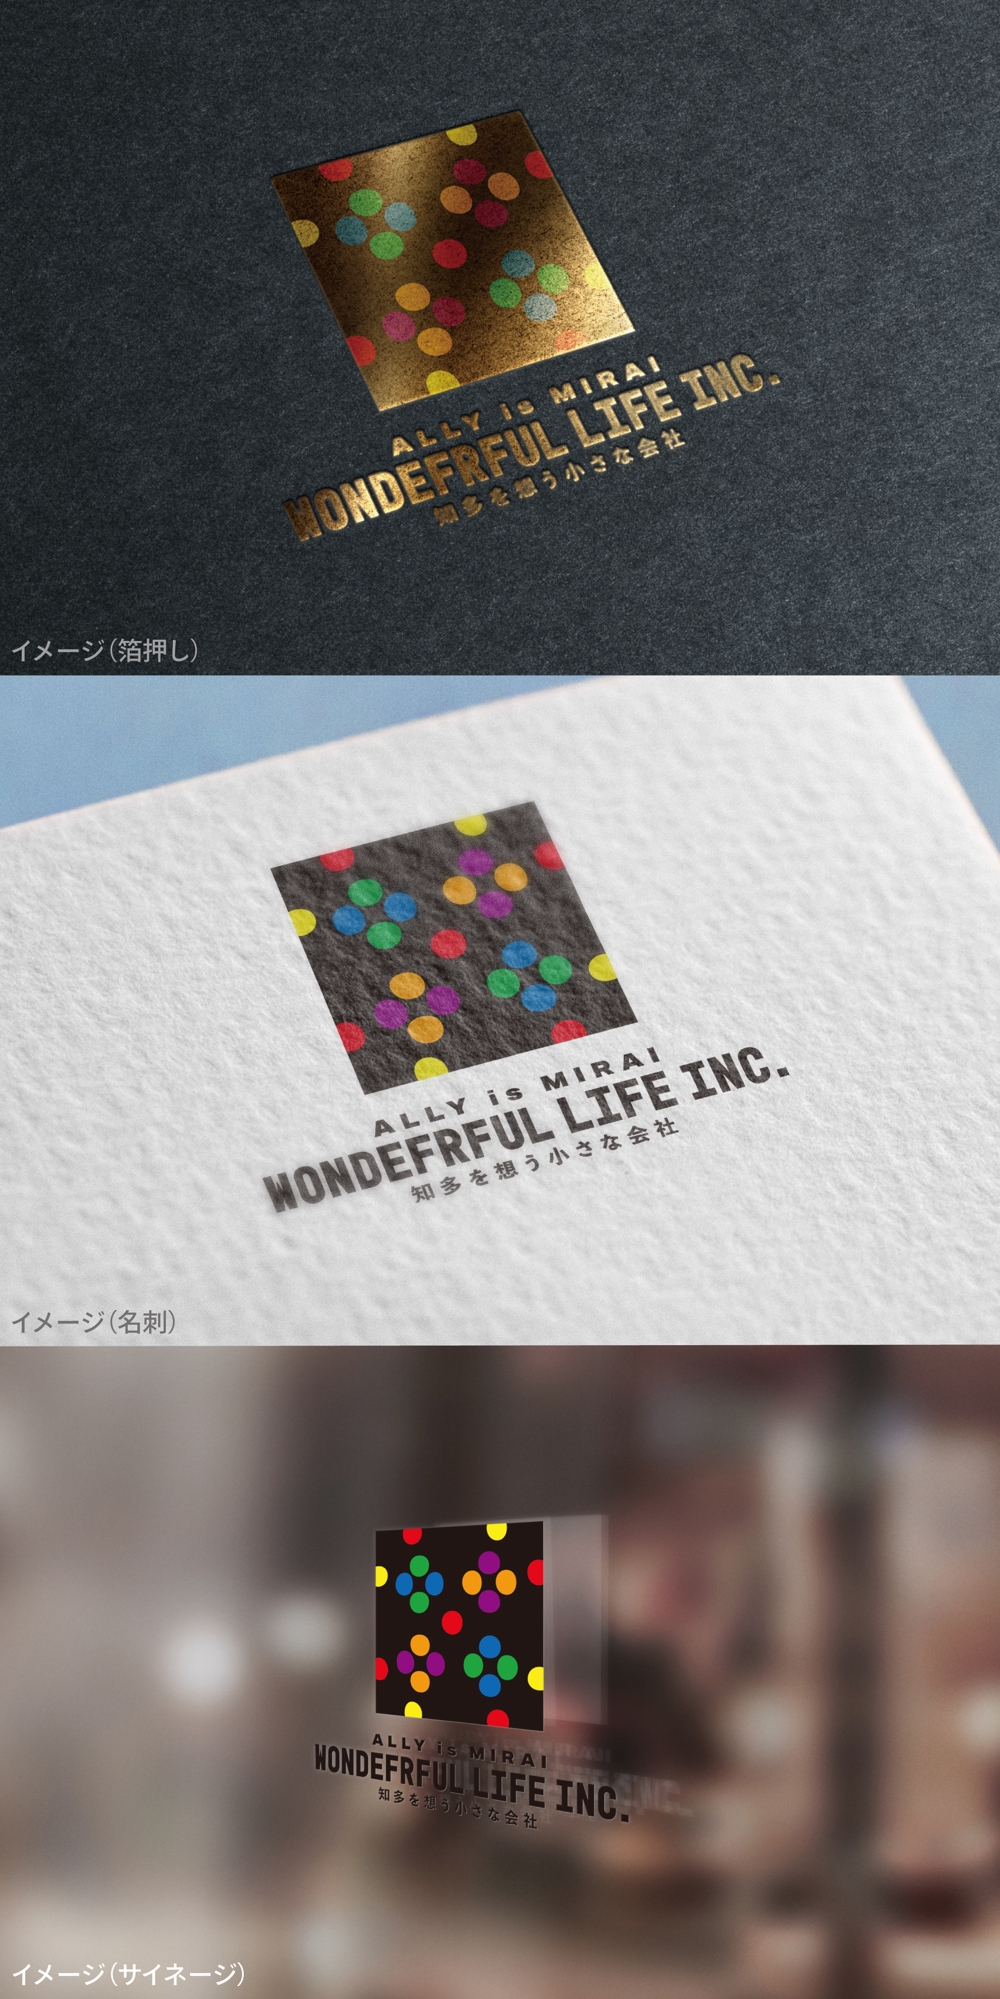 WONDEFRFUL LIFE Inc._logo02_01.jpg